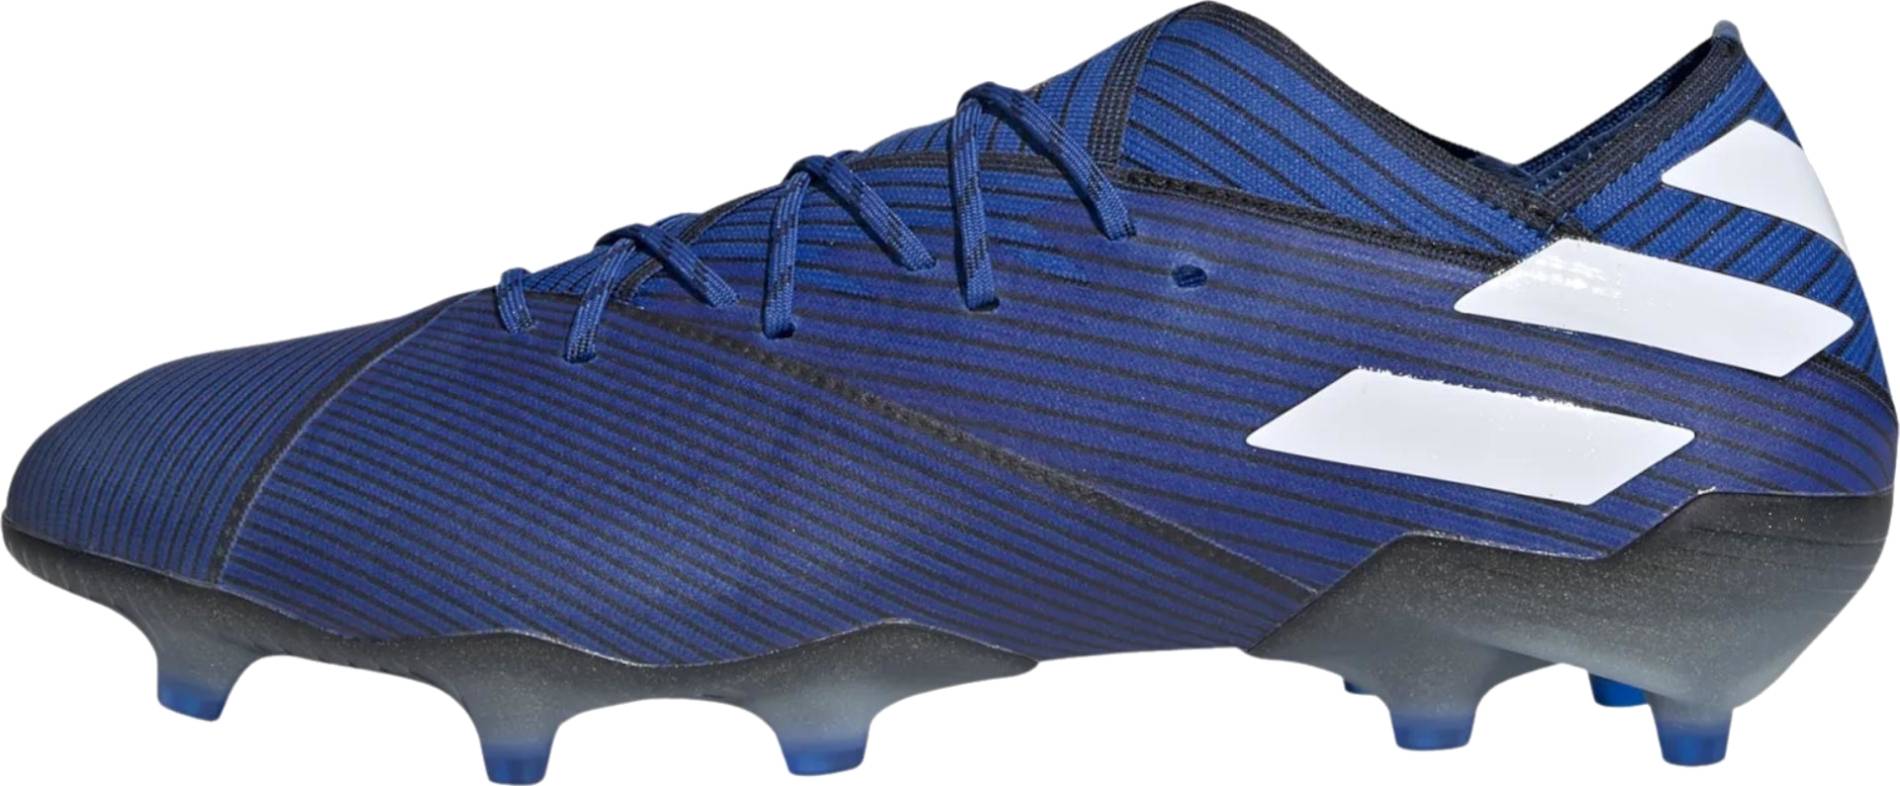 soccer shoes blue